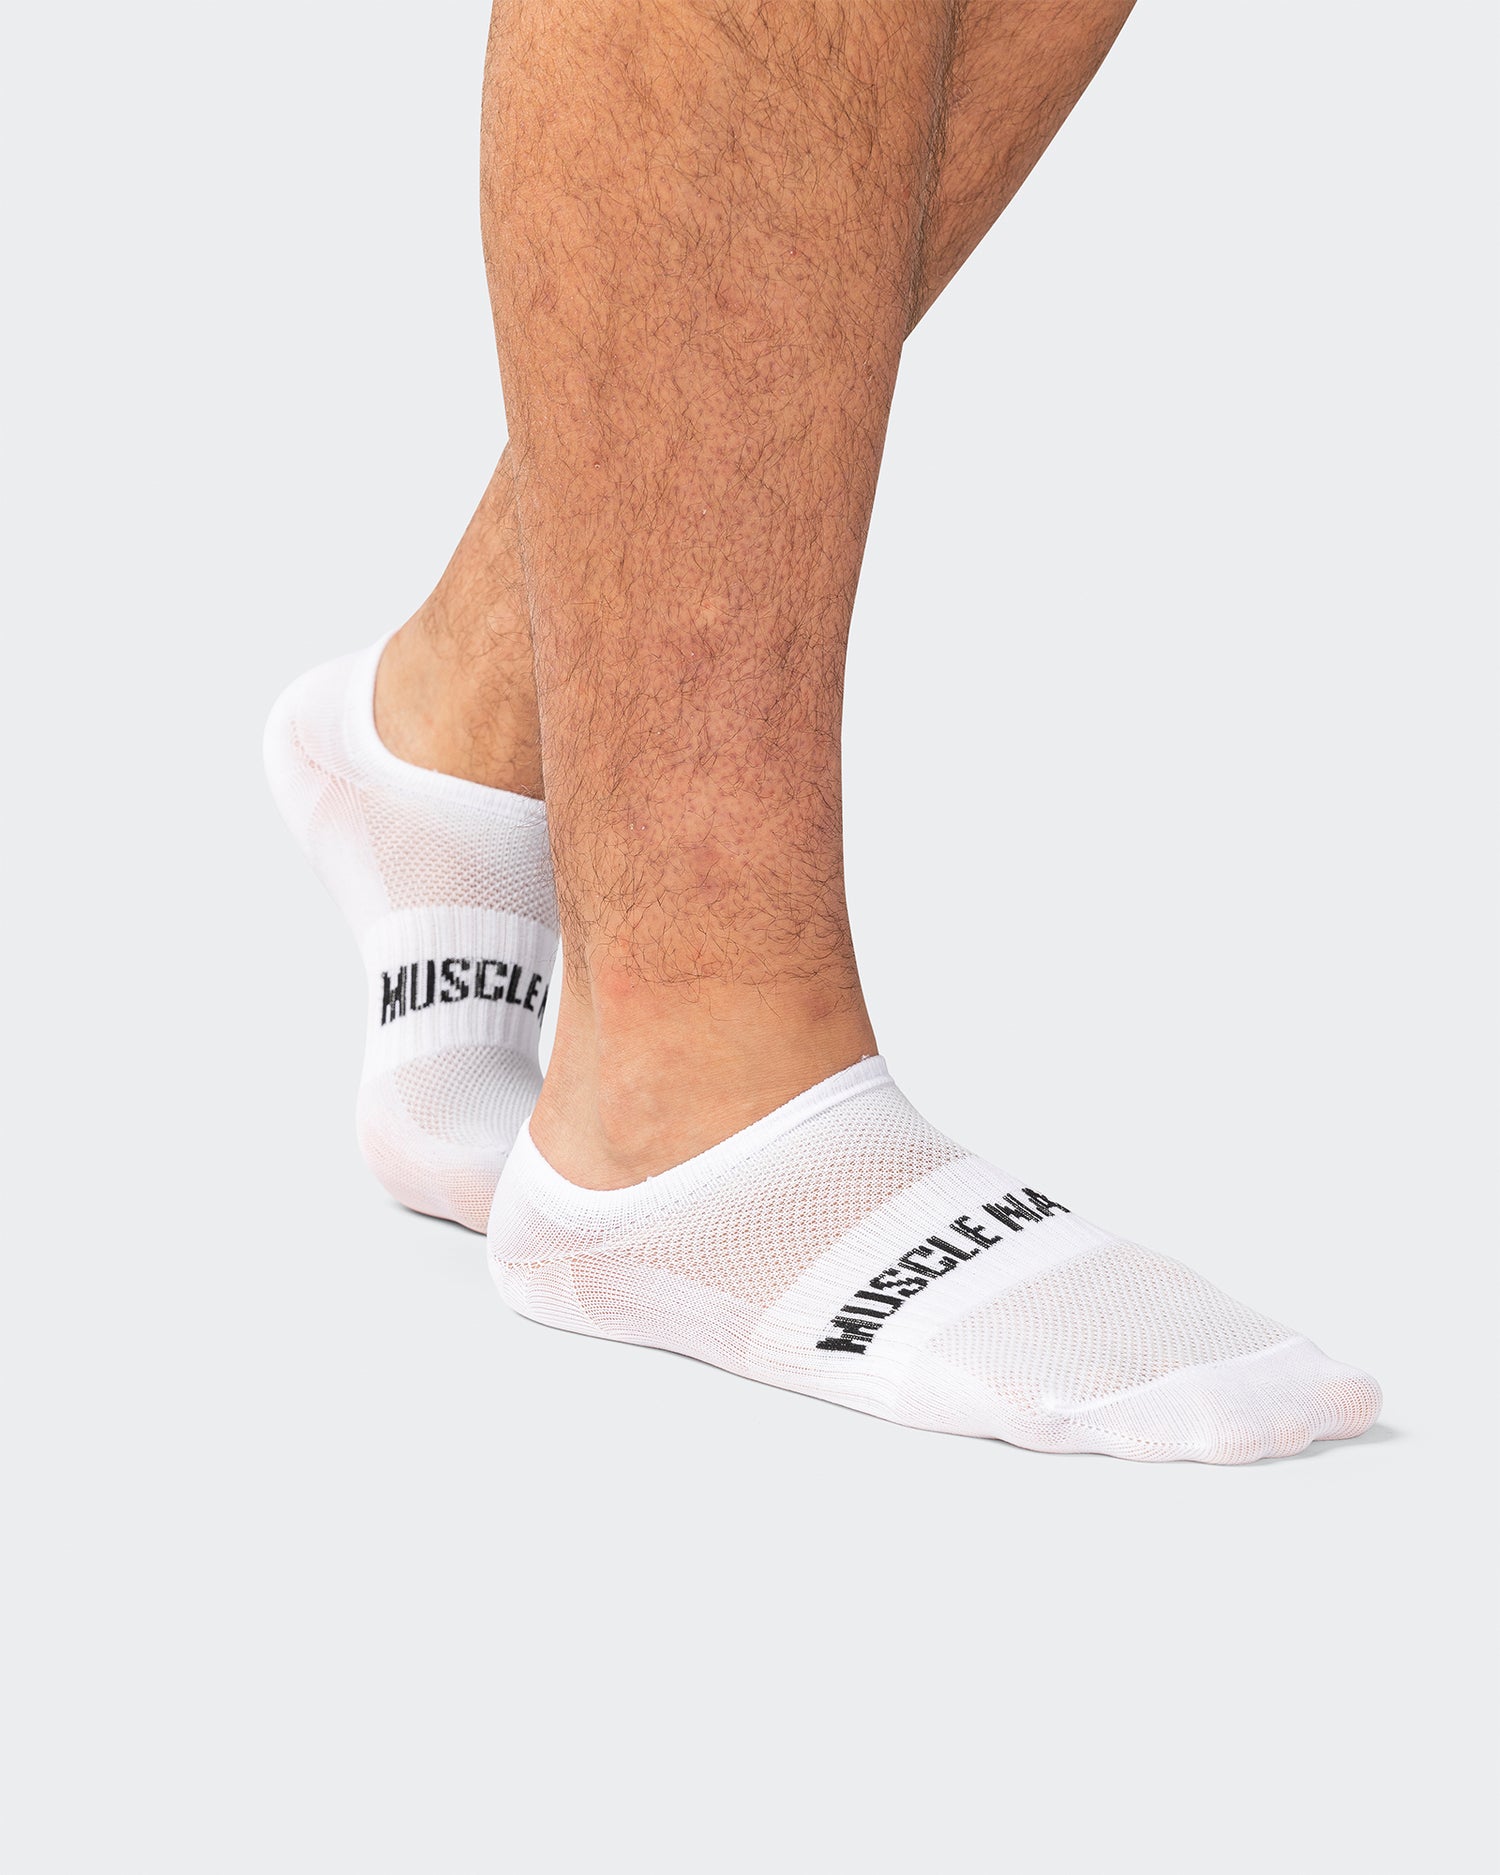 Mens Low Cut No Show Socks - White (2 Pack)